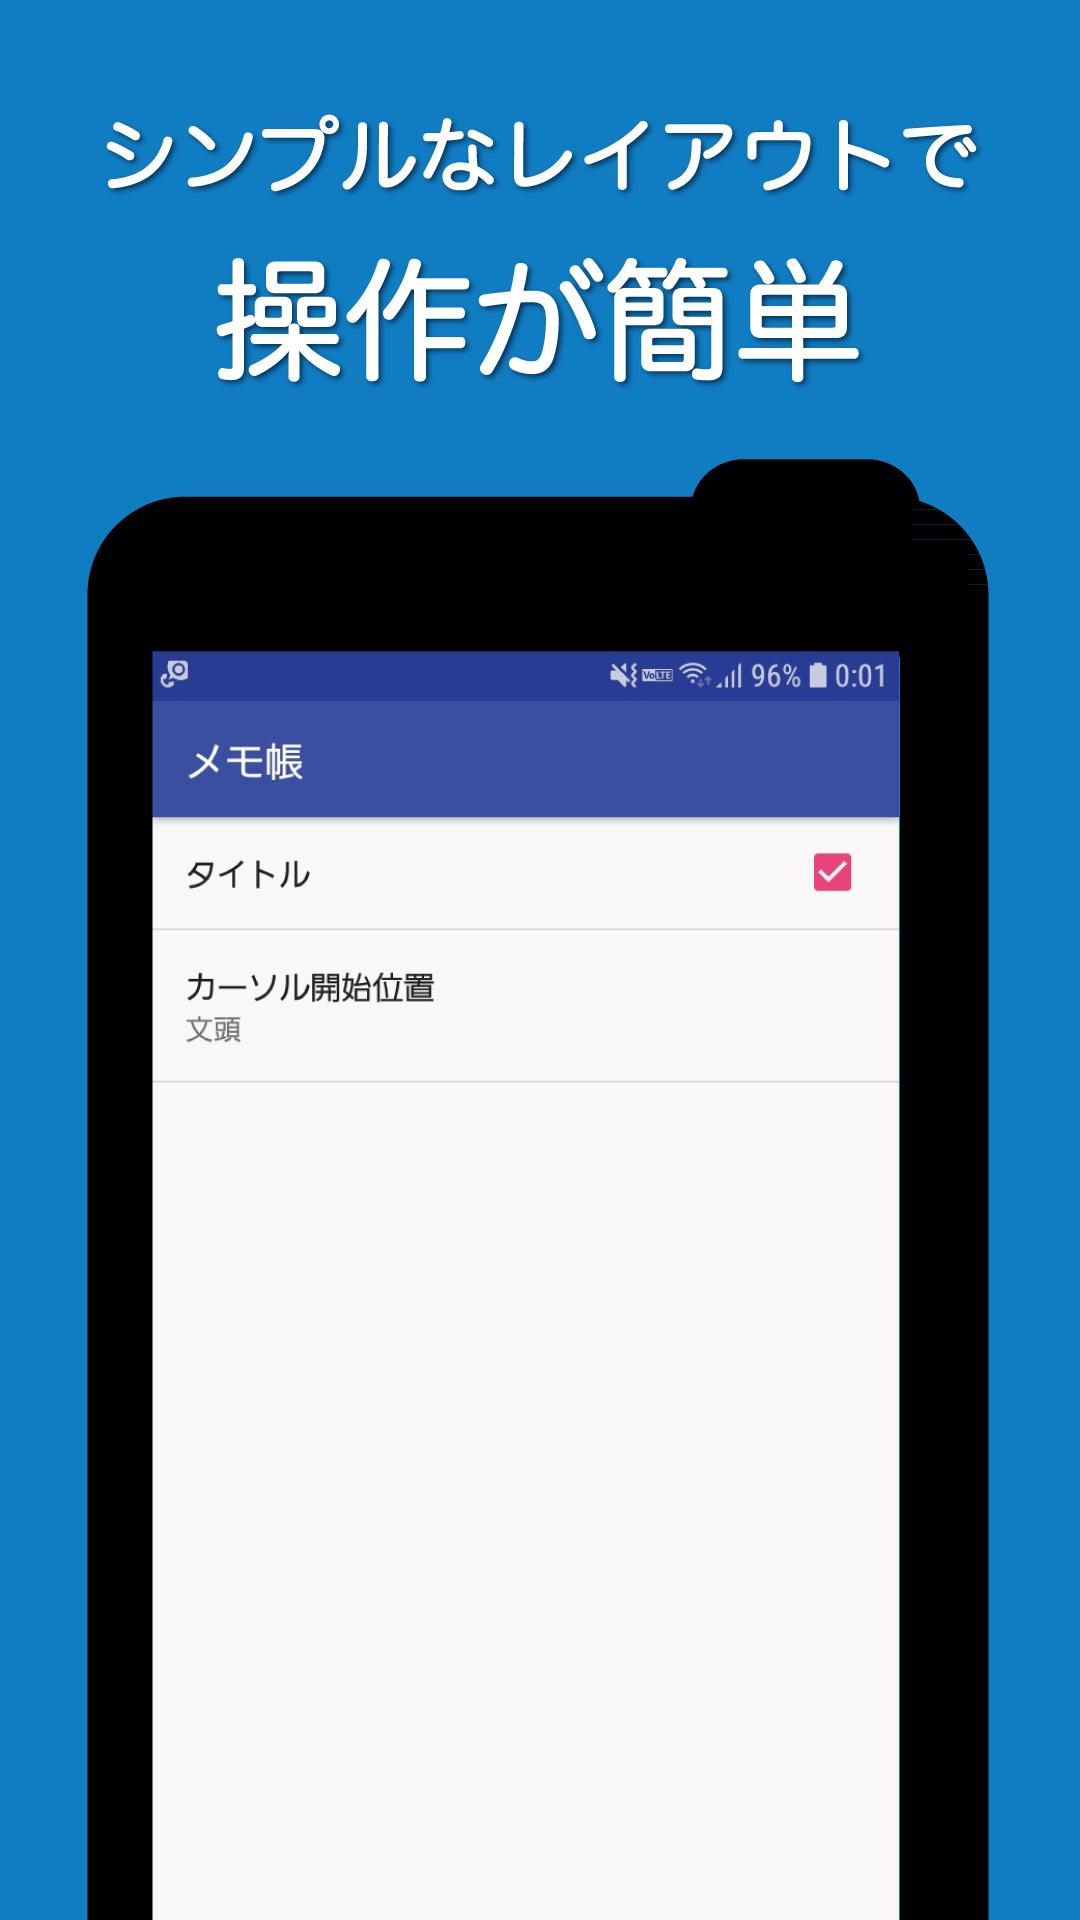 Tải Xuống Apk メモ帳 無料で簡単 シンプルメモ帳アプリ Cho Android